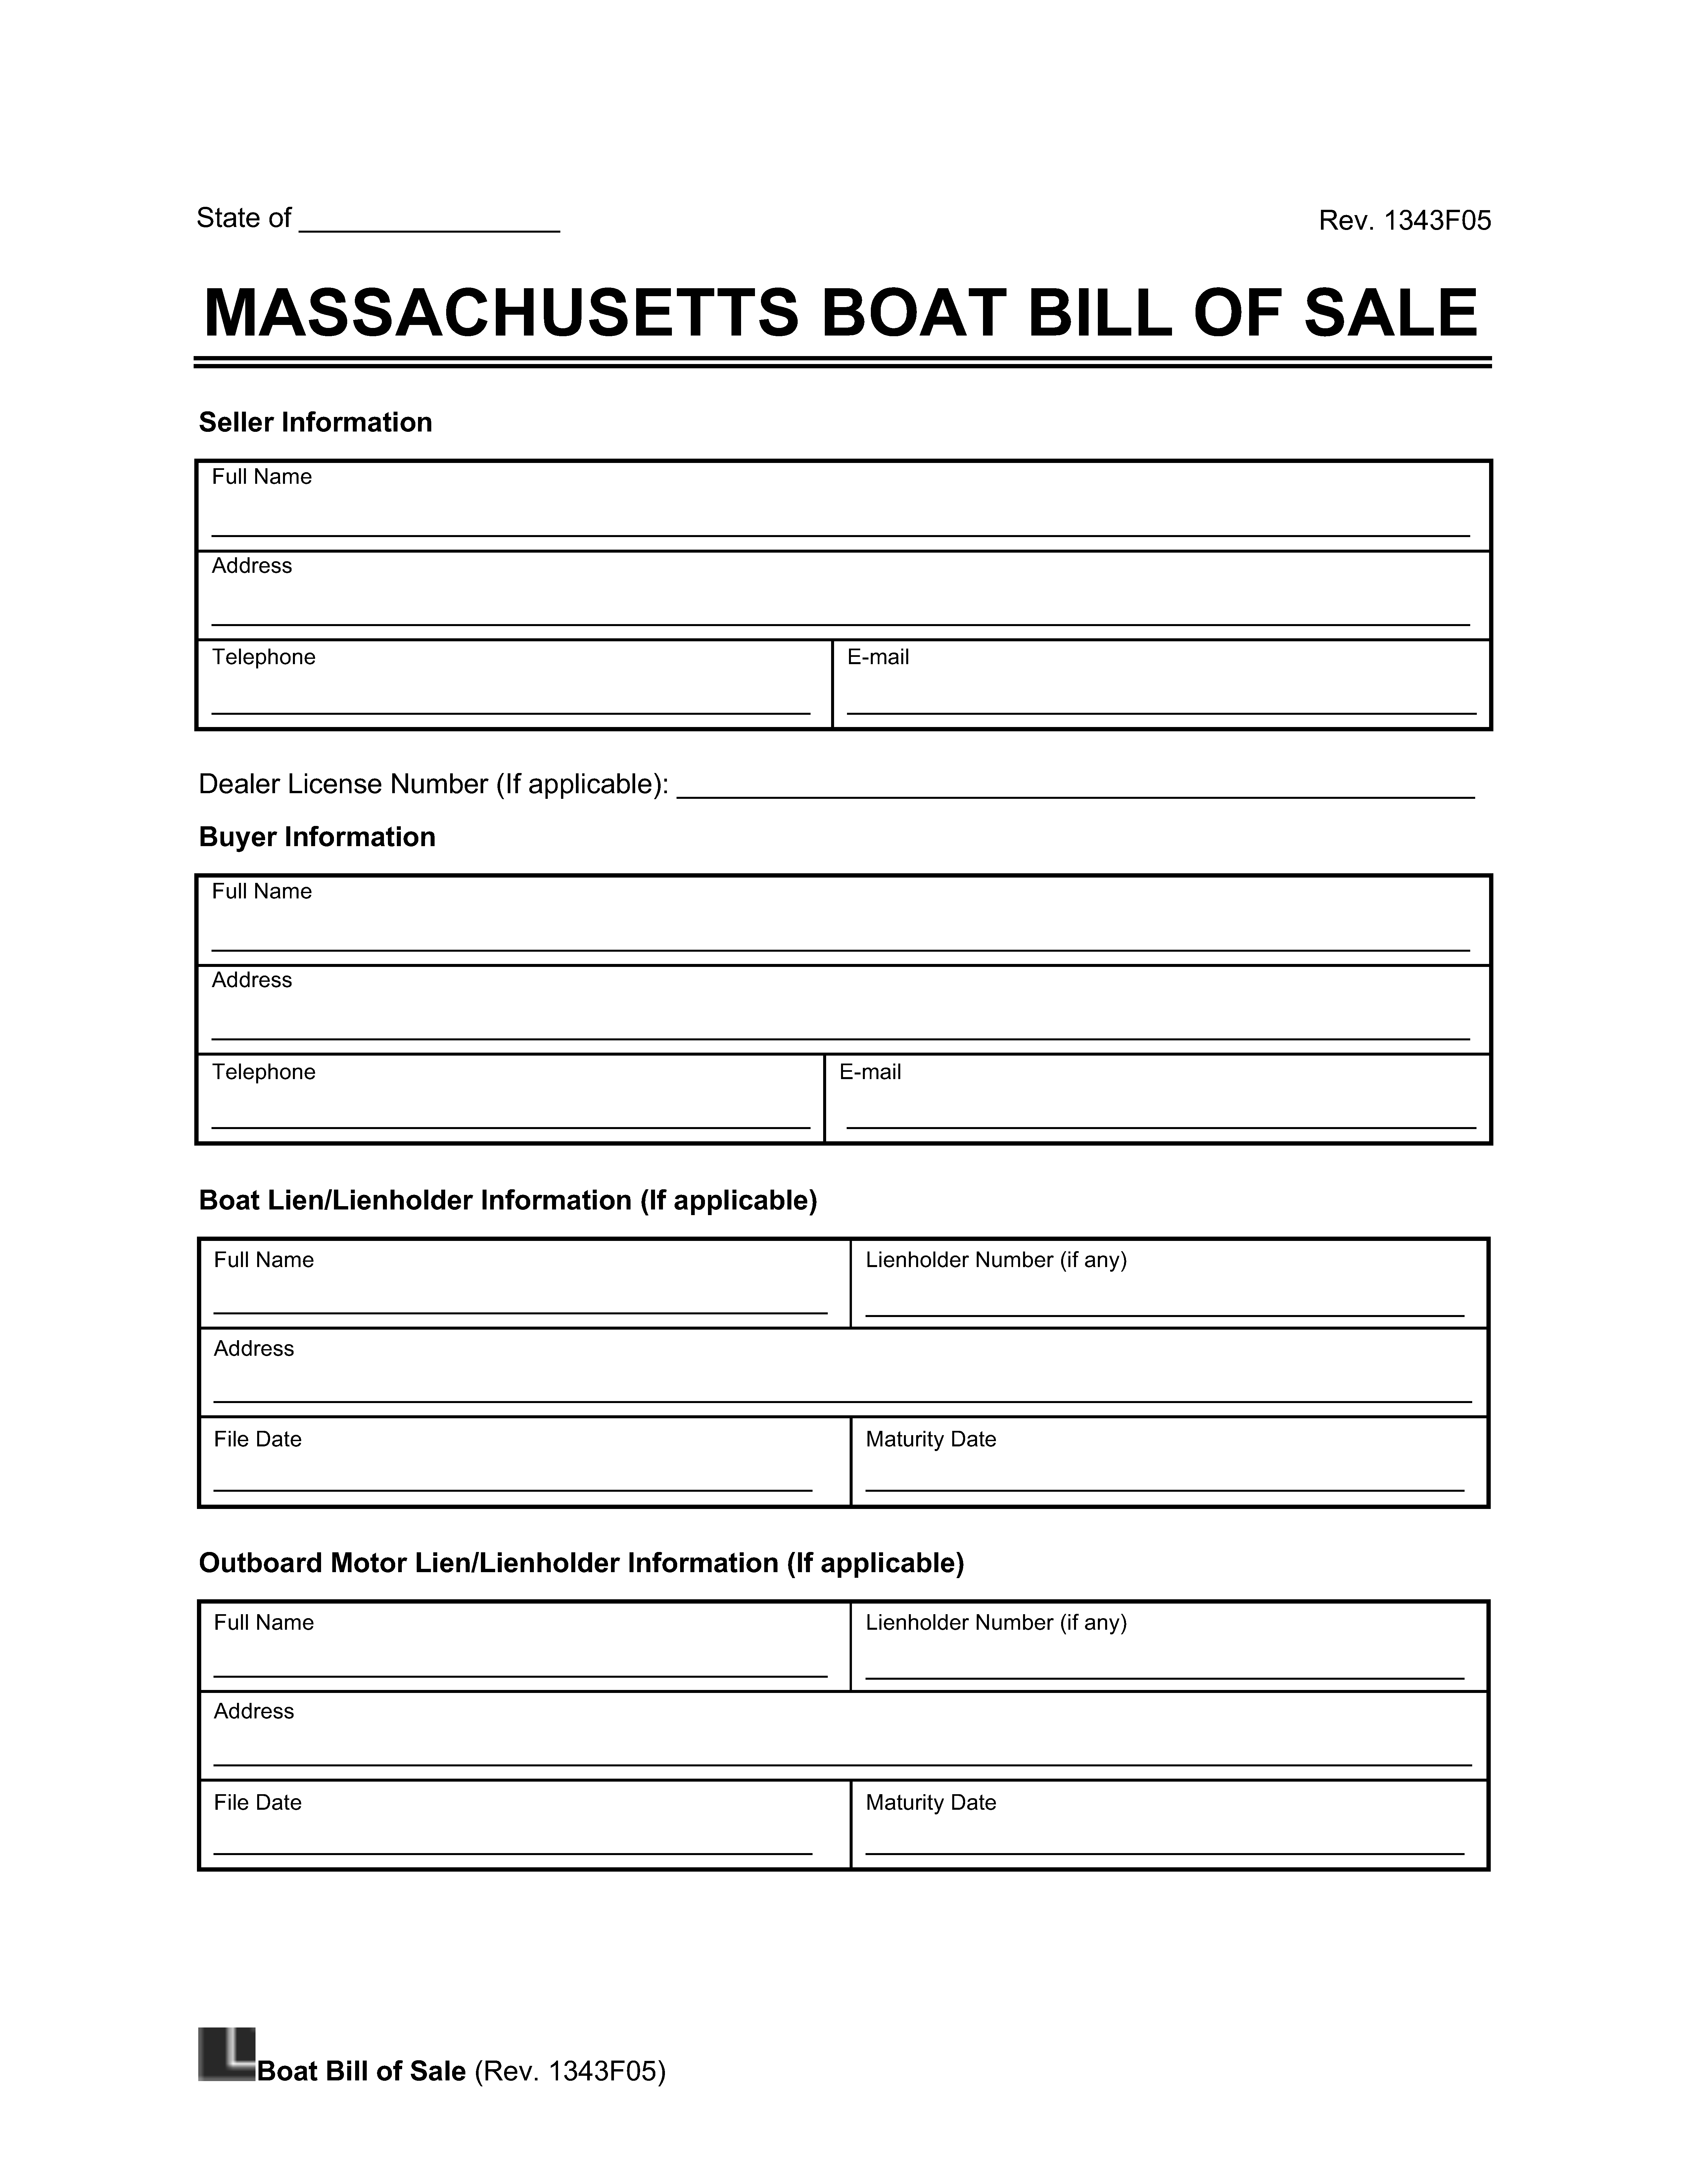 Massachusetts Boat Bill of Sale screenshot